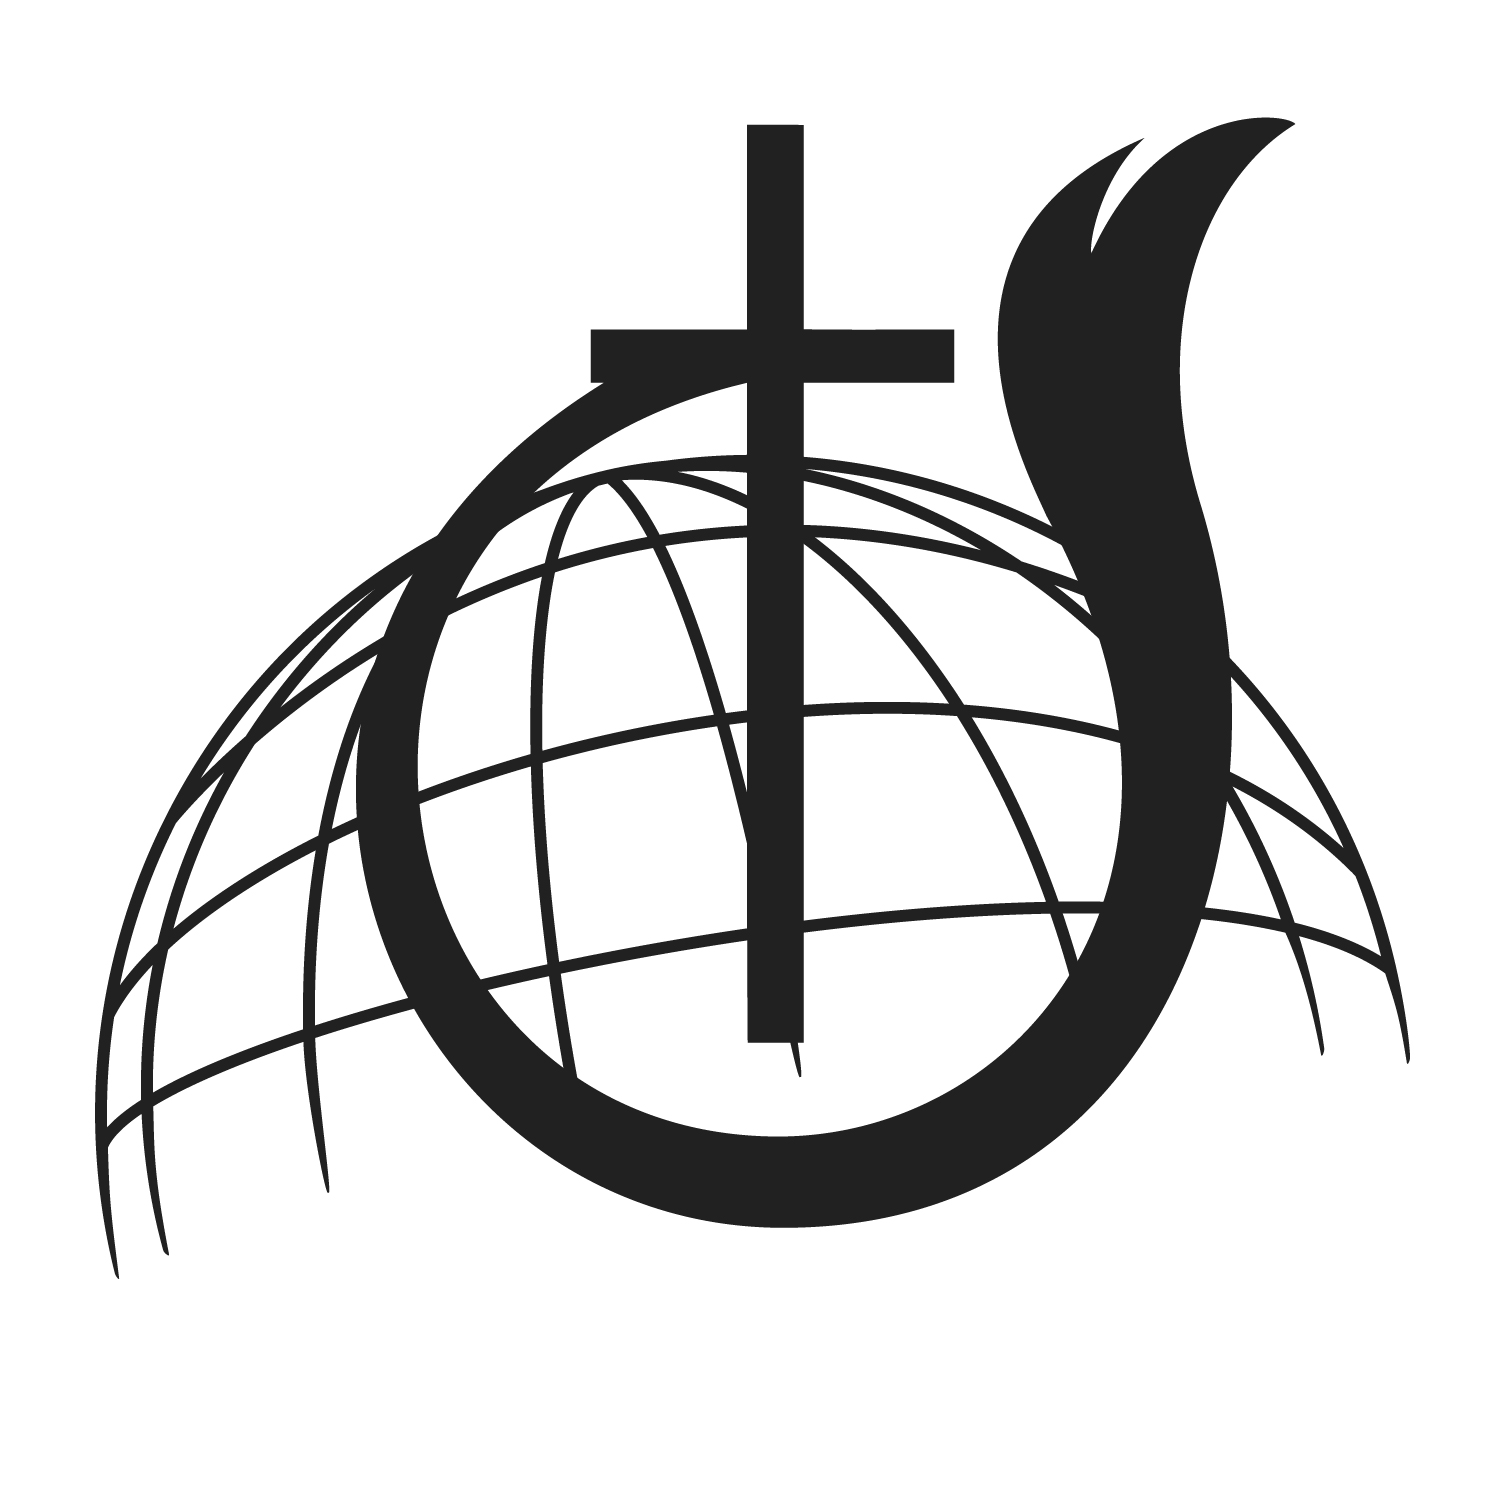 Media/Art Resources | Church of God International